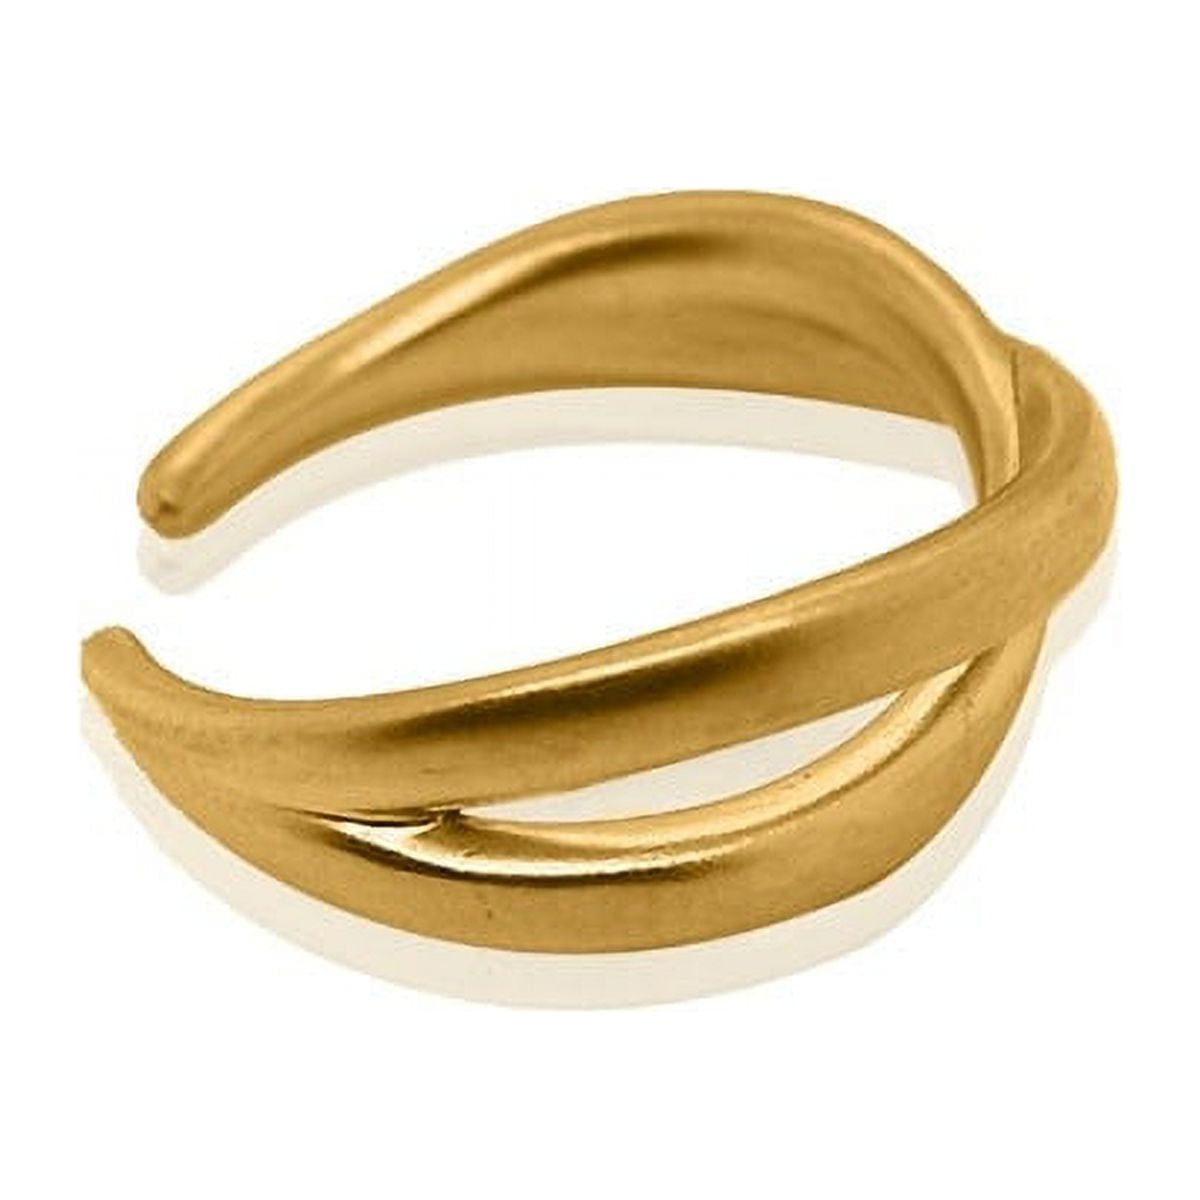 gold ring designs for women | 3 gram gold rings designs | anguhti design |  dubai jewelry collection | Ring designs, Gold ring designs, Gold rings